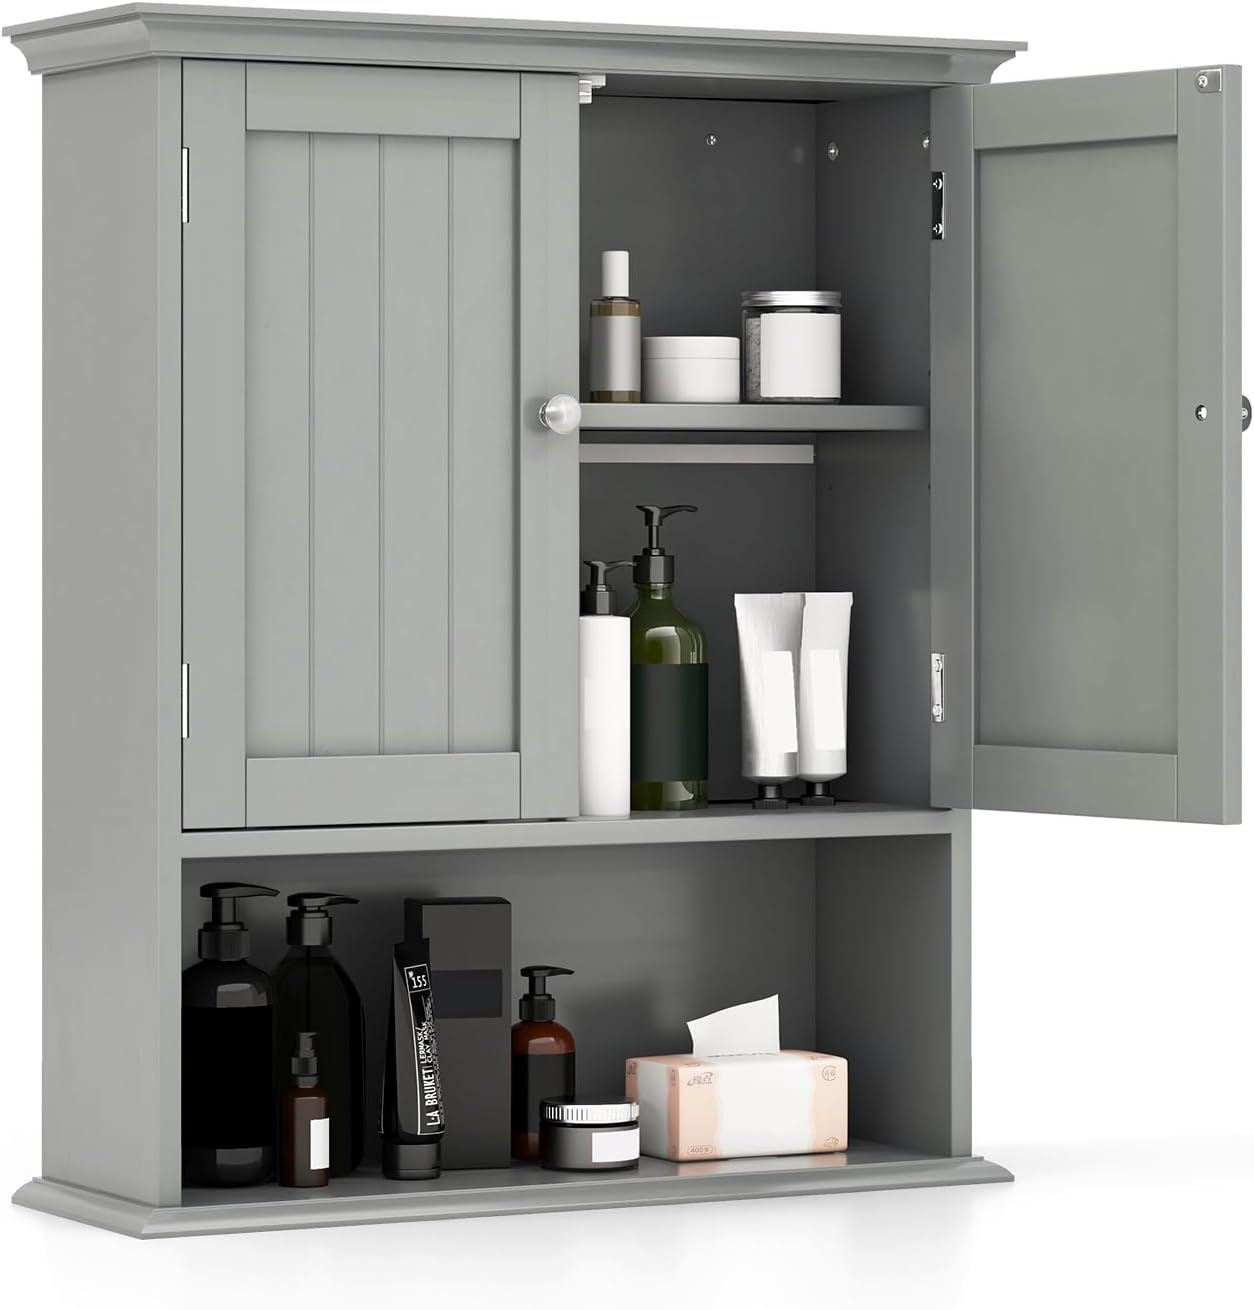 Wall Mounted Medicine Storage Cabinet Bathroom Organizer Cupboard